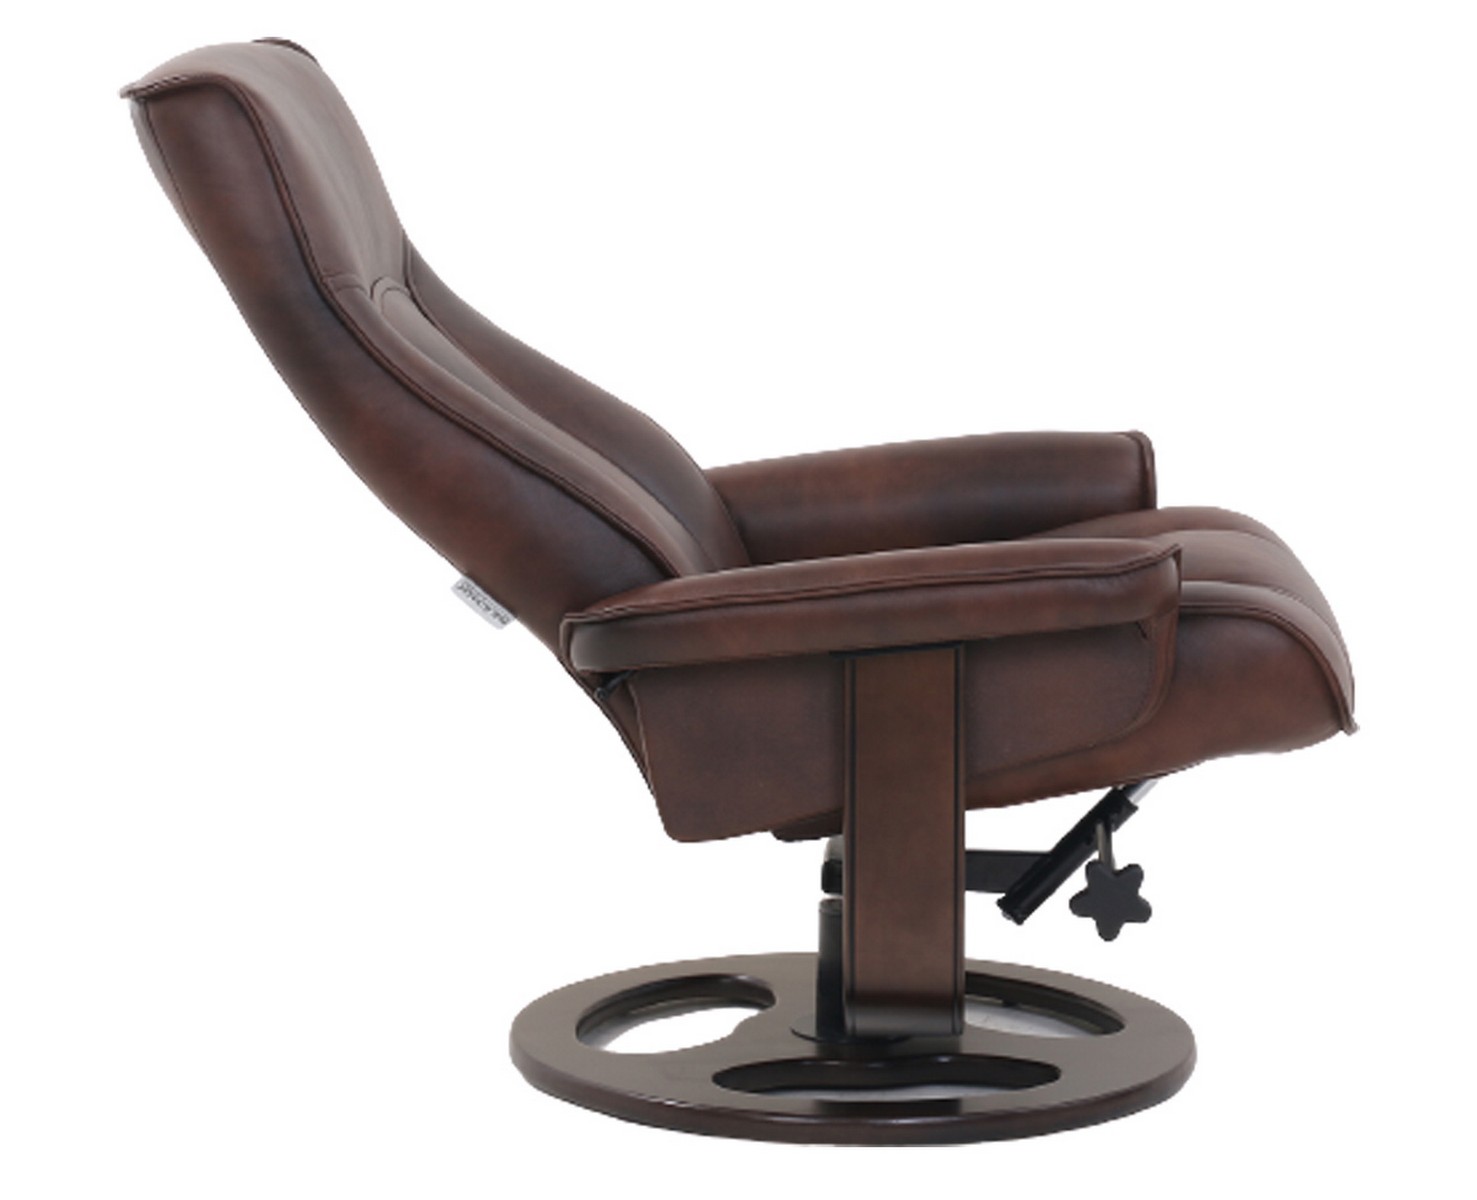 Barcalounger Austin Pedestal Recliner Chair/Ottoman - Hilton Whiskey/Leather Match